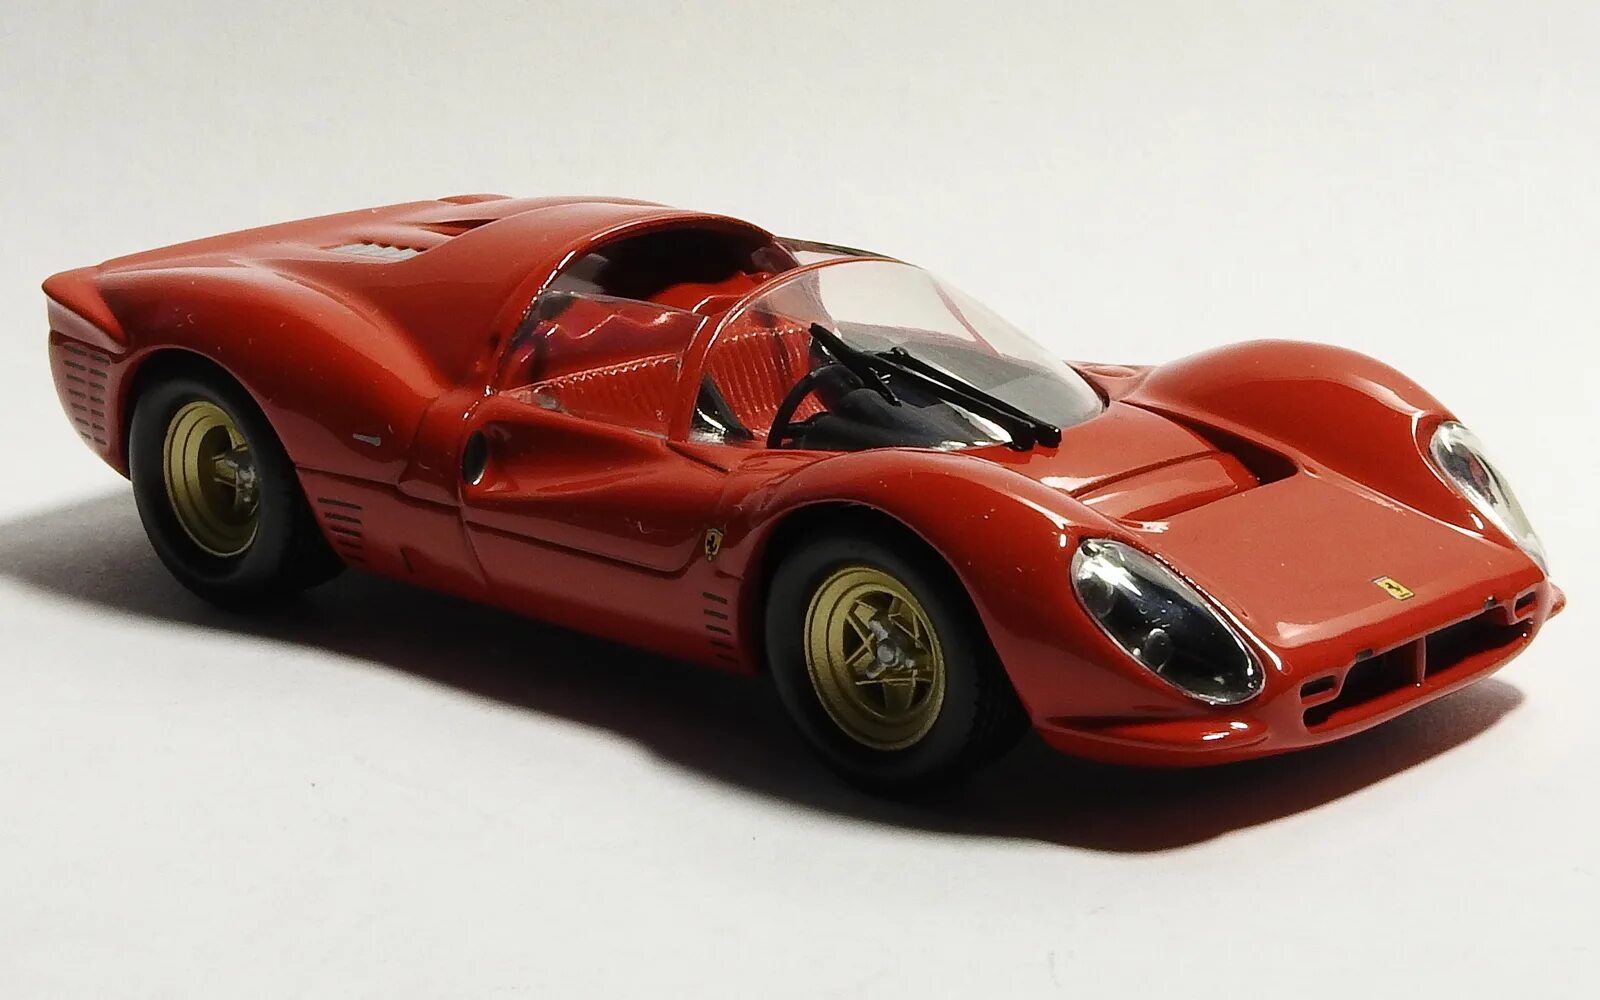 Ferrari 330 p4 16 Ferrari collection. Ferrari 330 p4 модель 1 43. Ferrari 330 p4 1/43 1967. Ferrari collection 1 43.